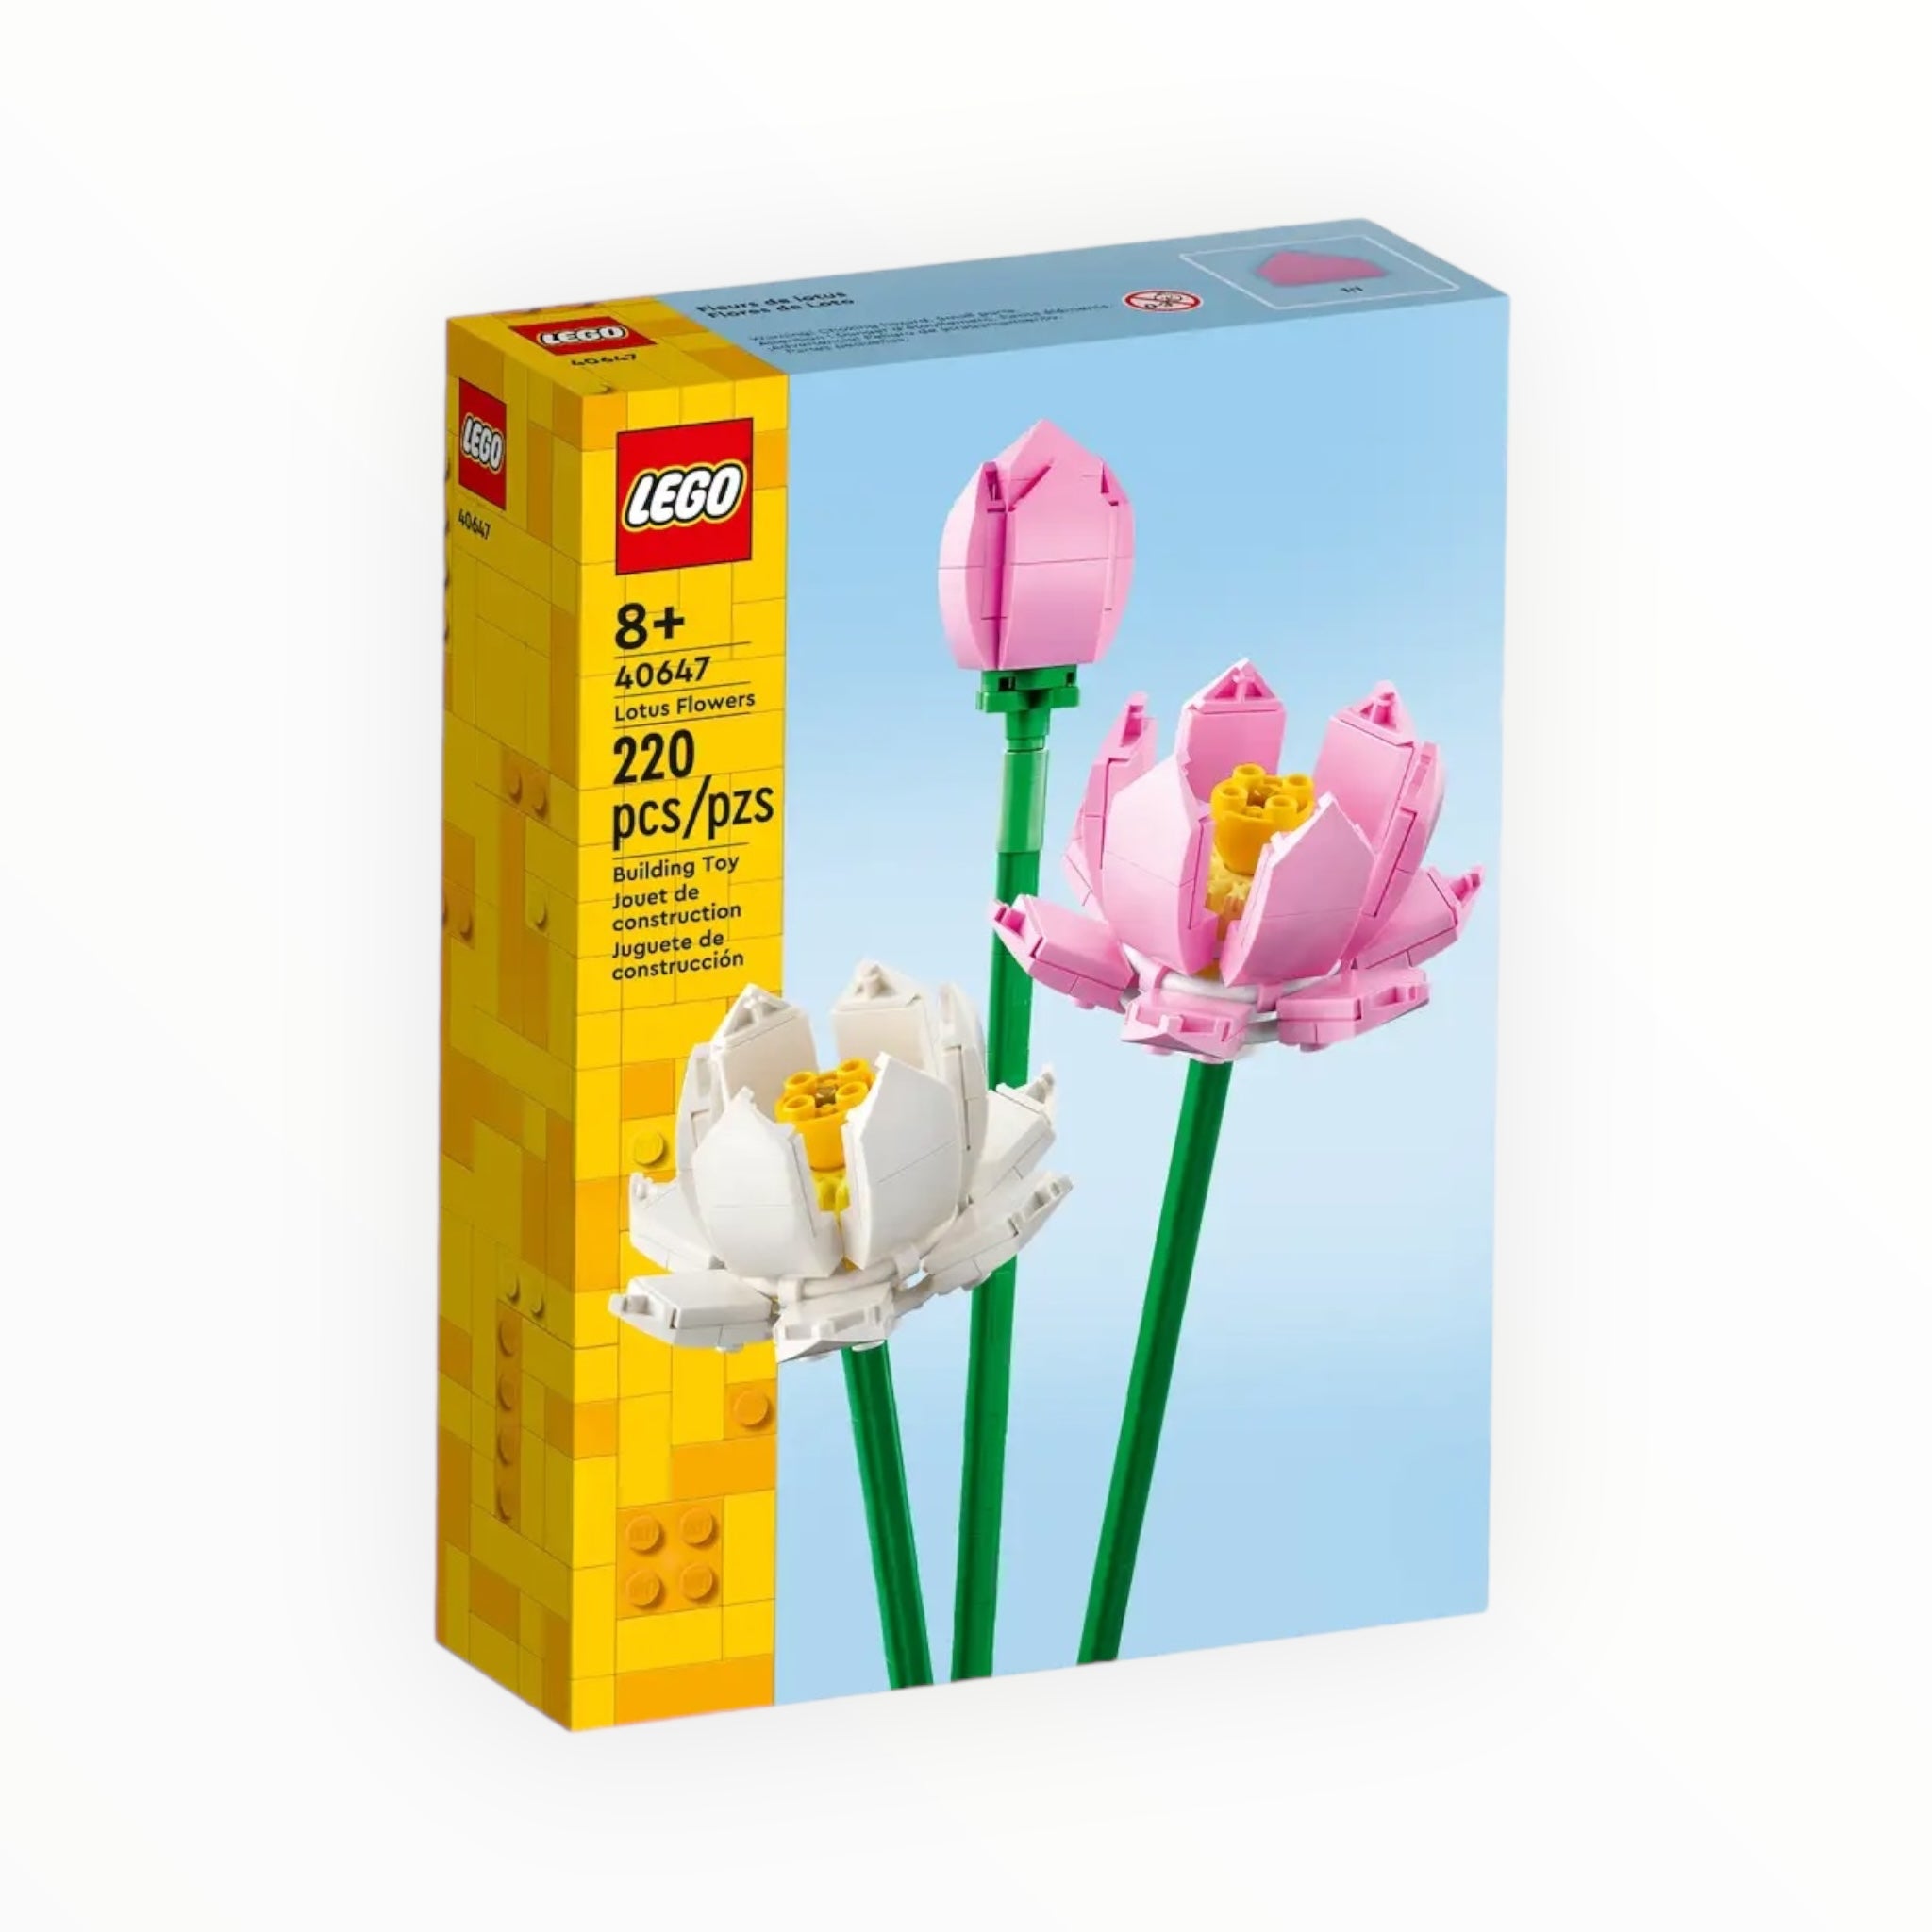 40647 LEGO Lotus Flowers